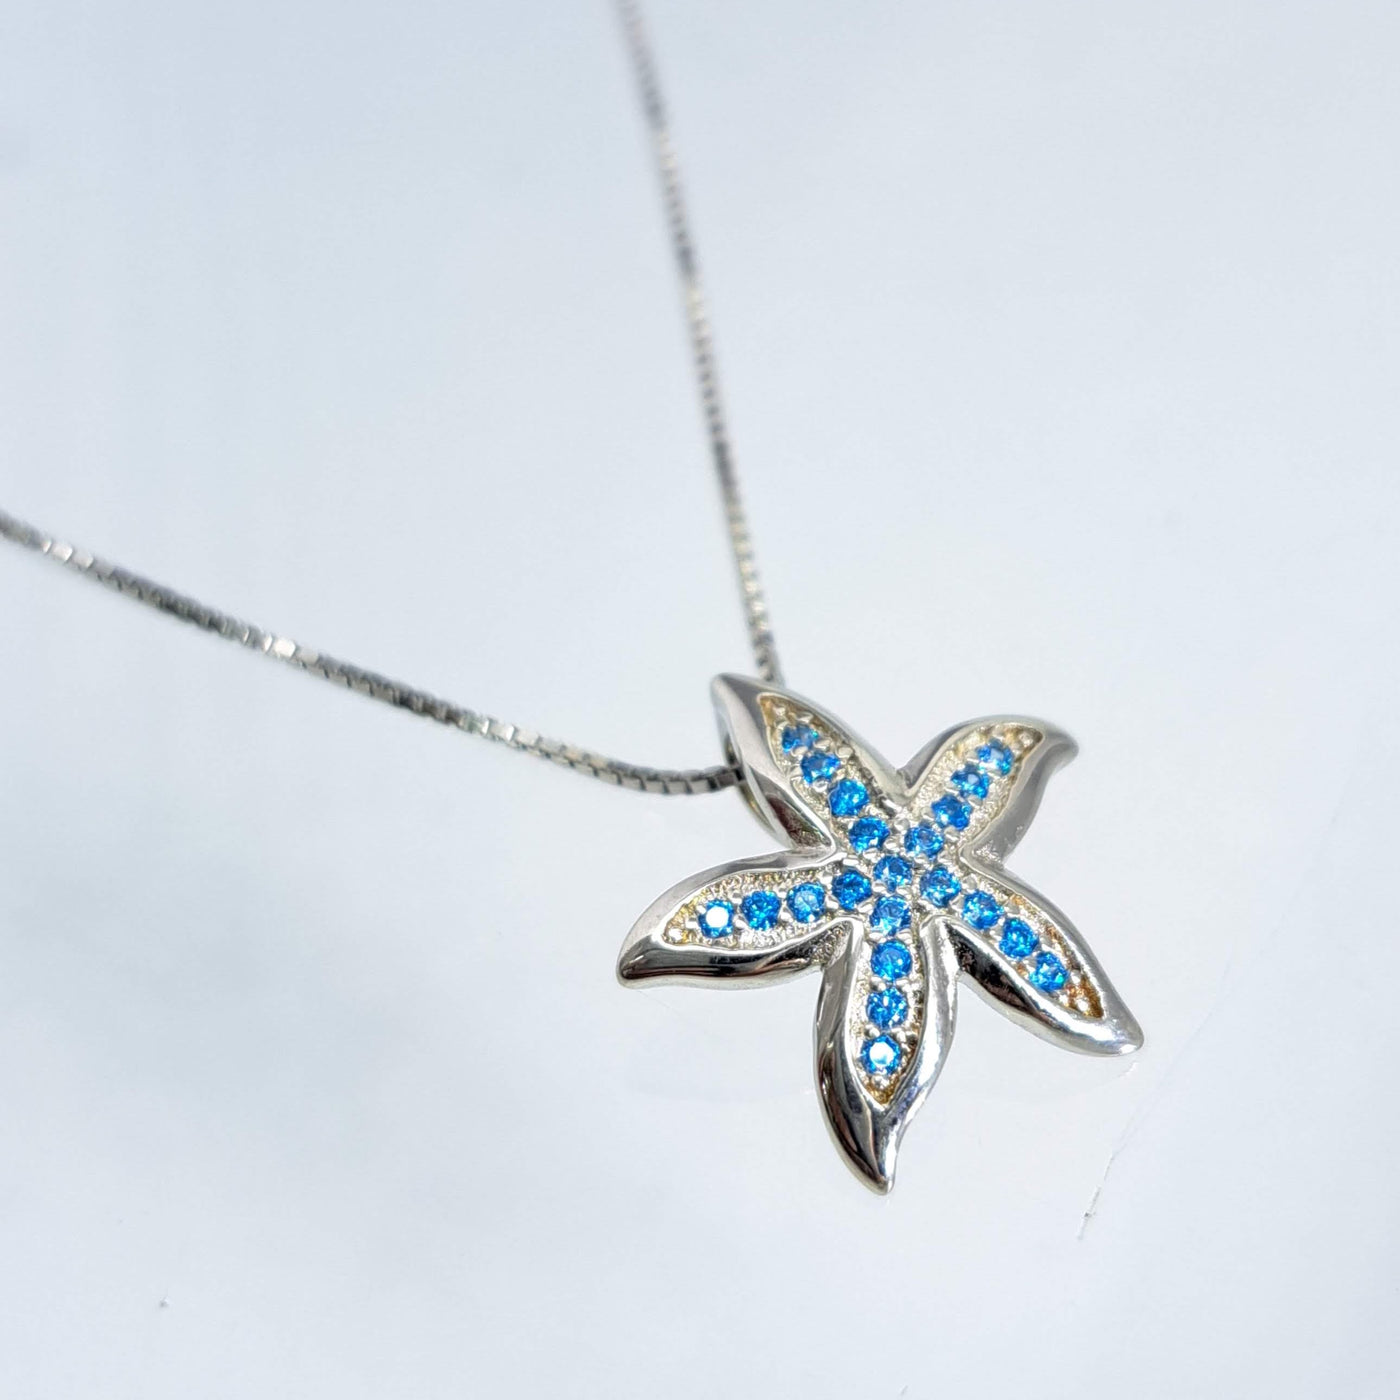 "Star Baby" Necklace - Blue Topaz, Anti-tarnish Sterling